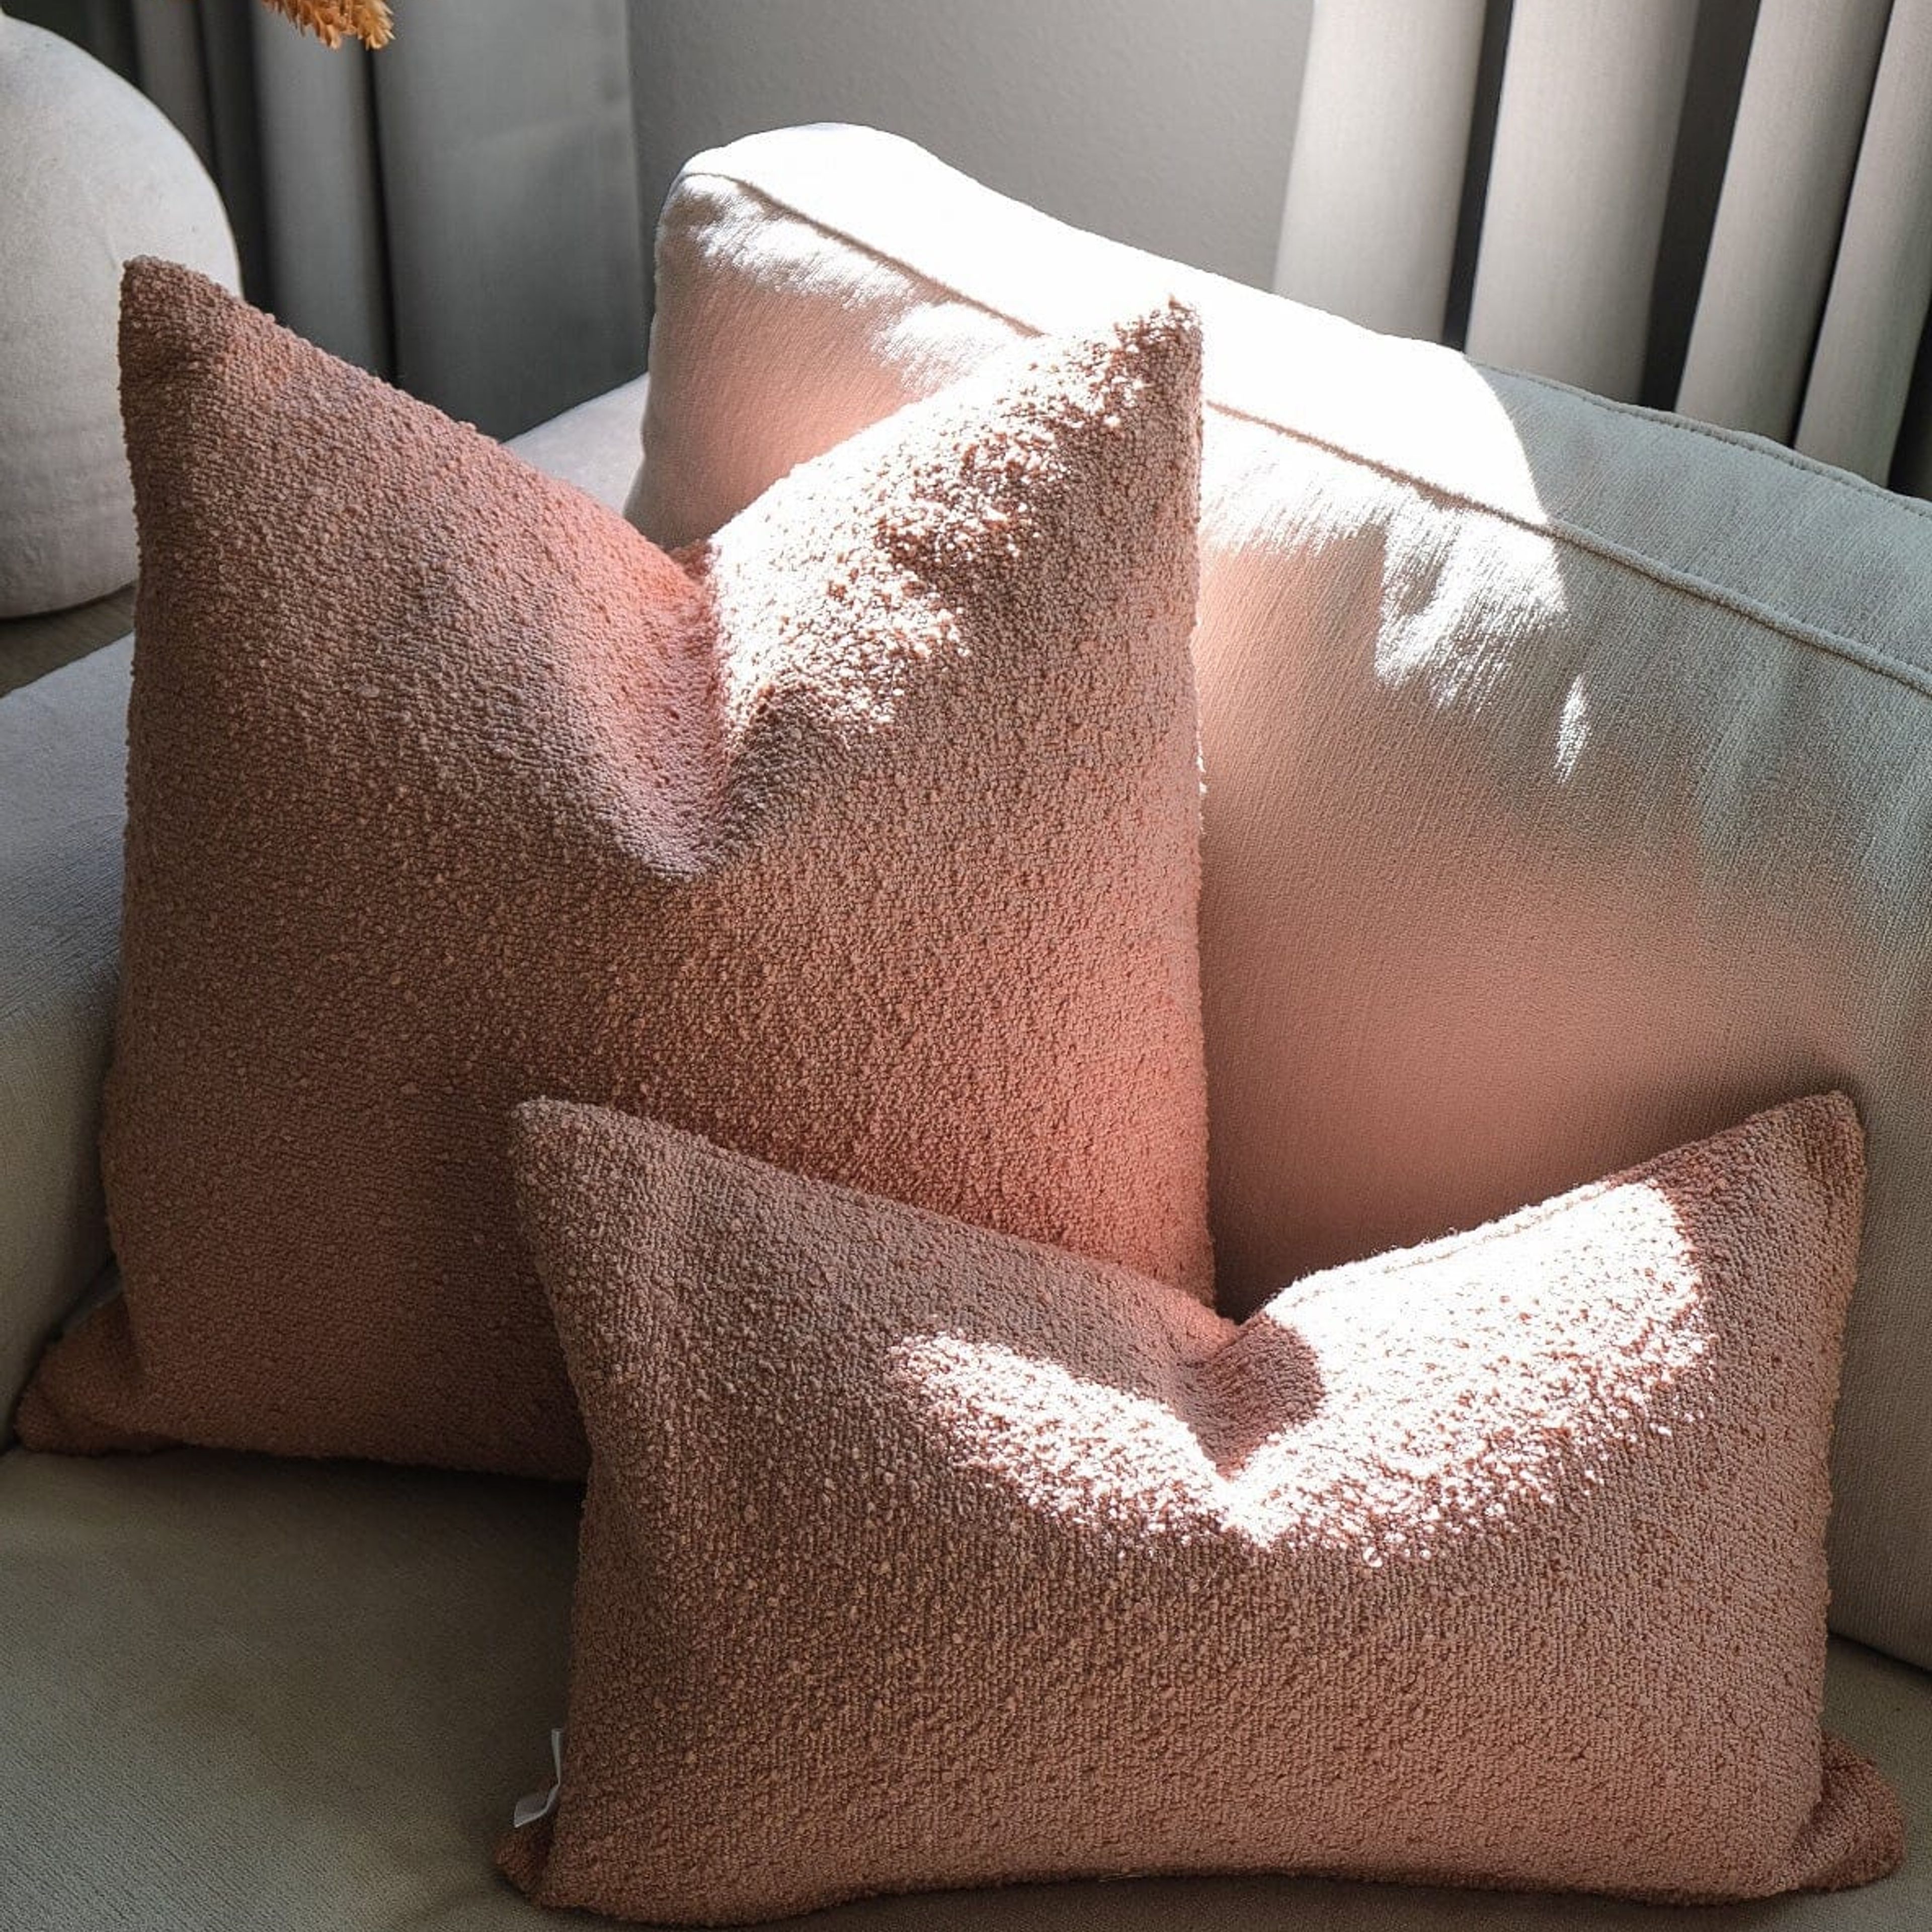 Boucle Pillow: Rose